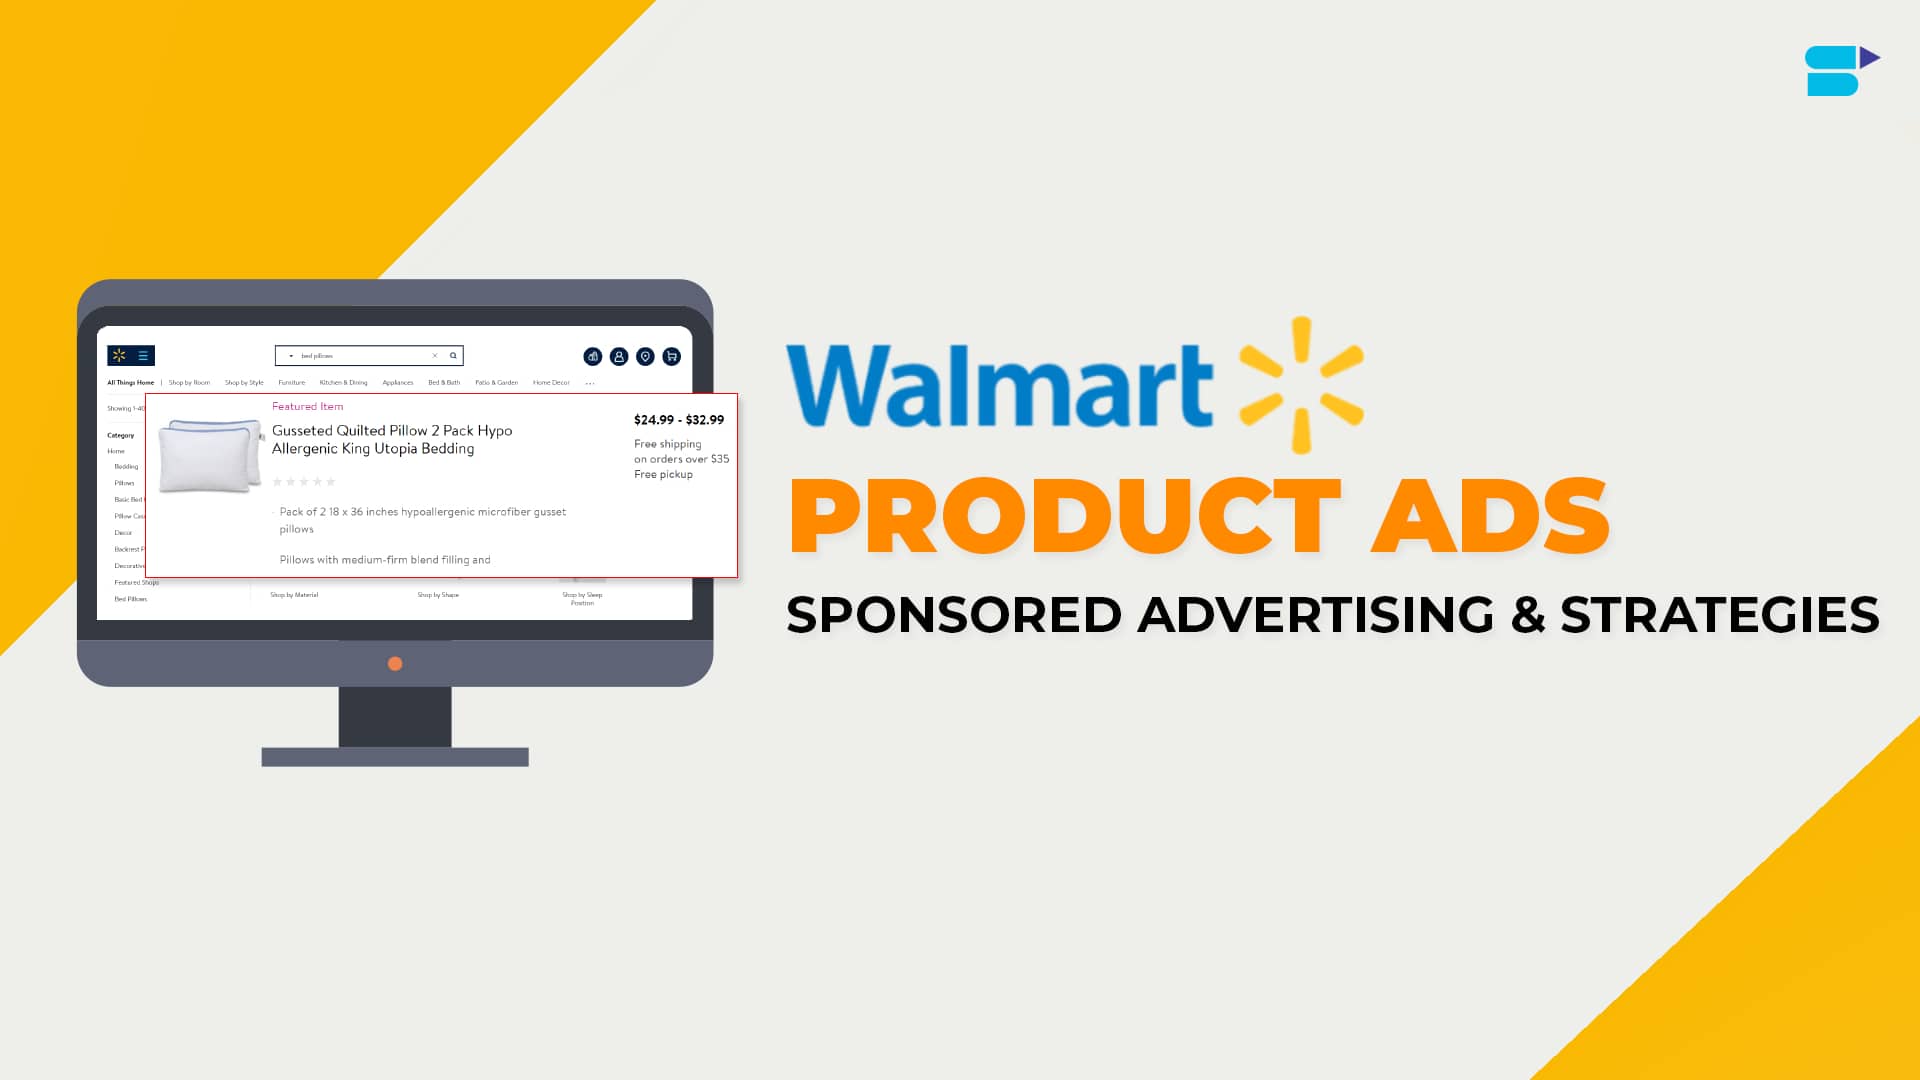 https://www.sellerapp.com/blog/wp-content/uploads/2018/12/walmart-product-ads-guide-sellerapp.jpg